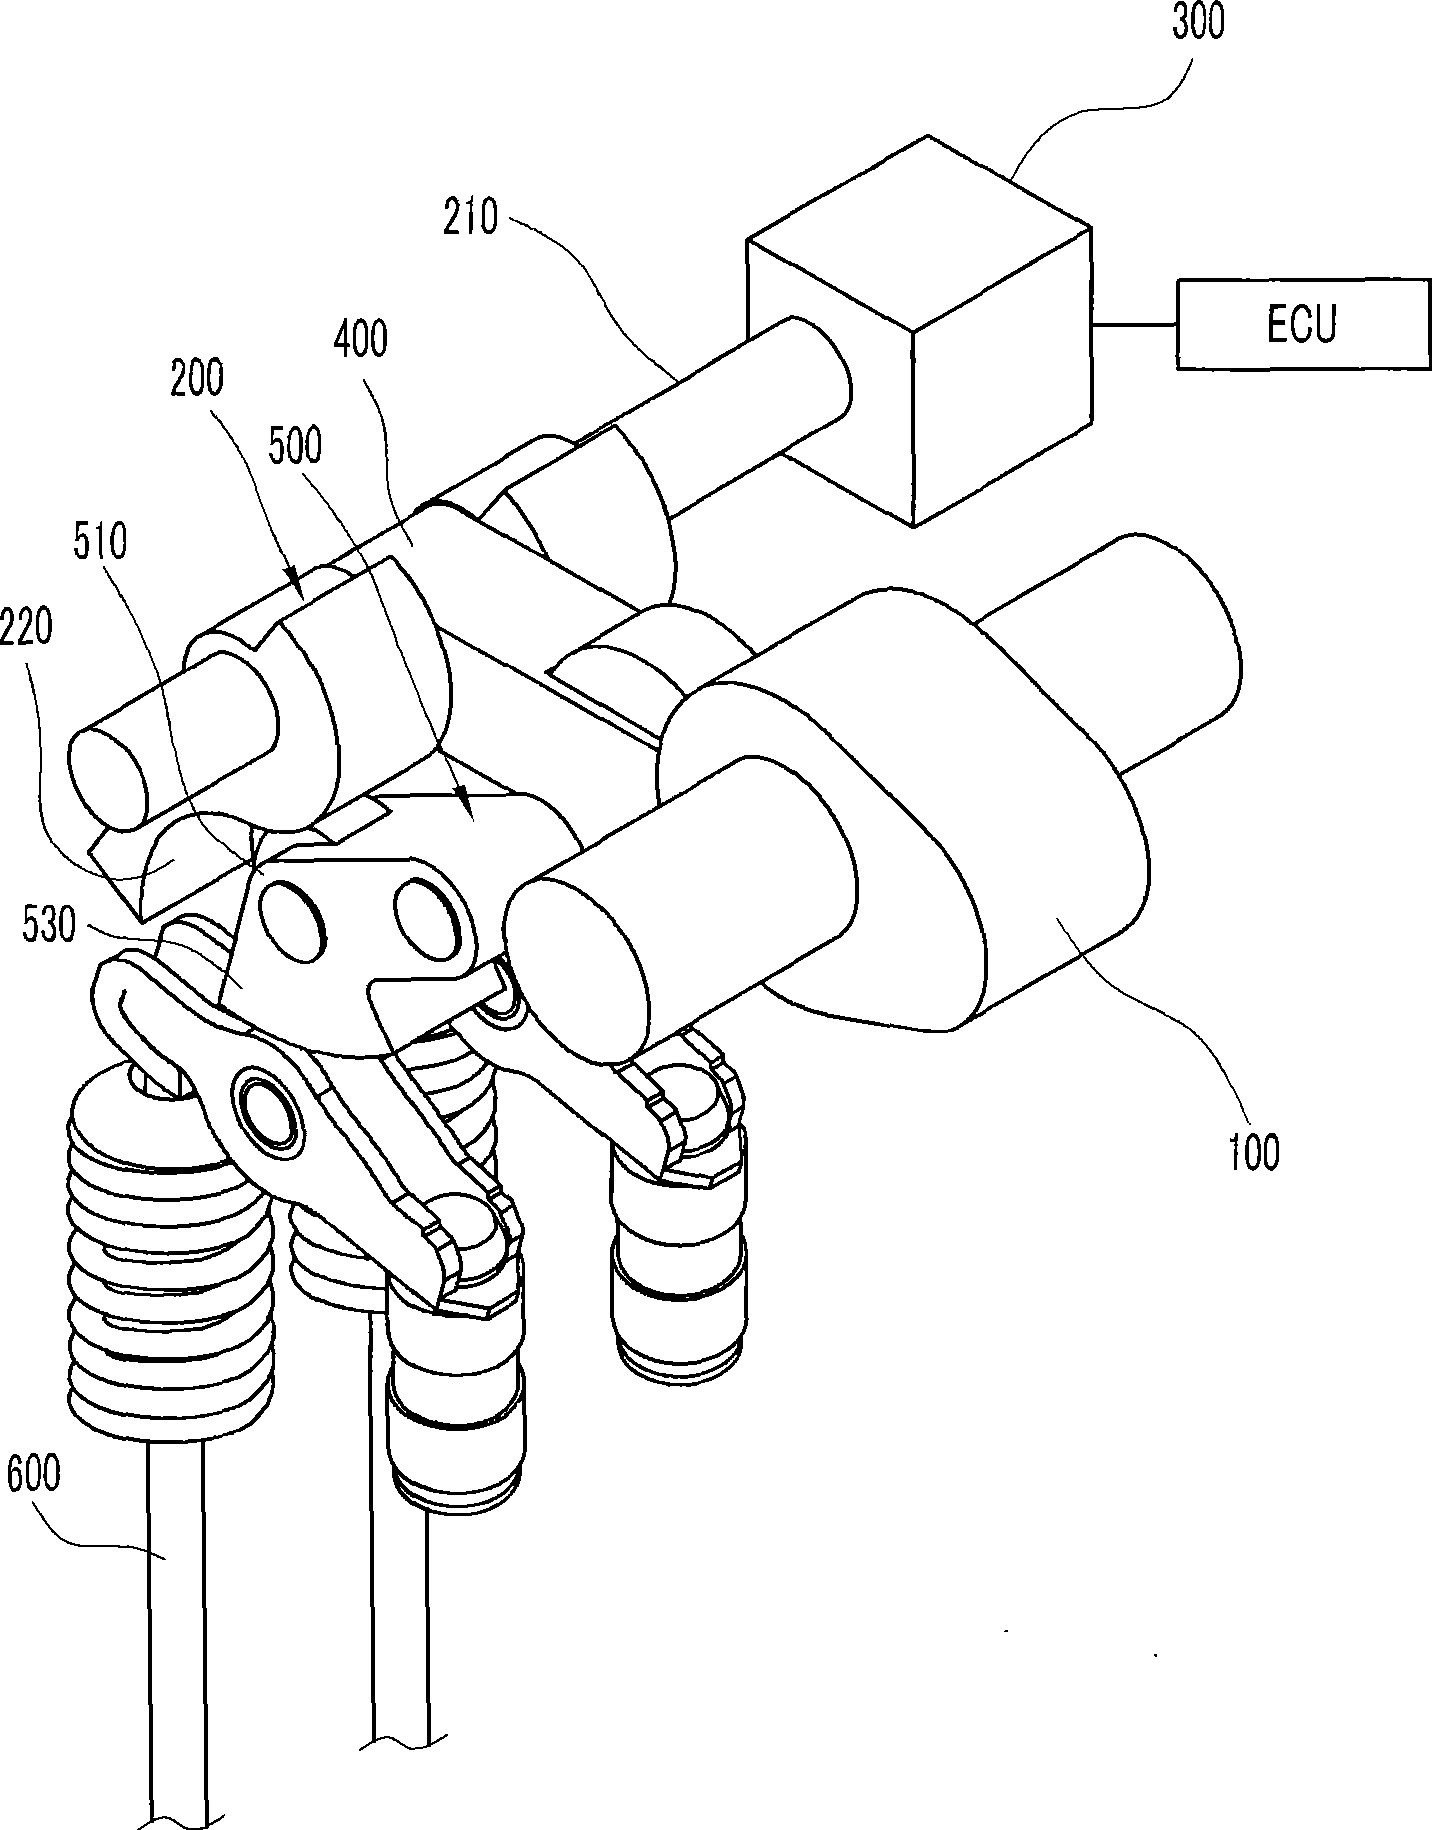 Continuous variable valve lift apparatus